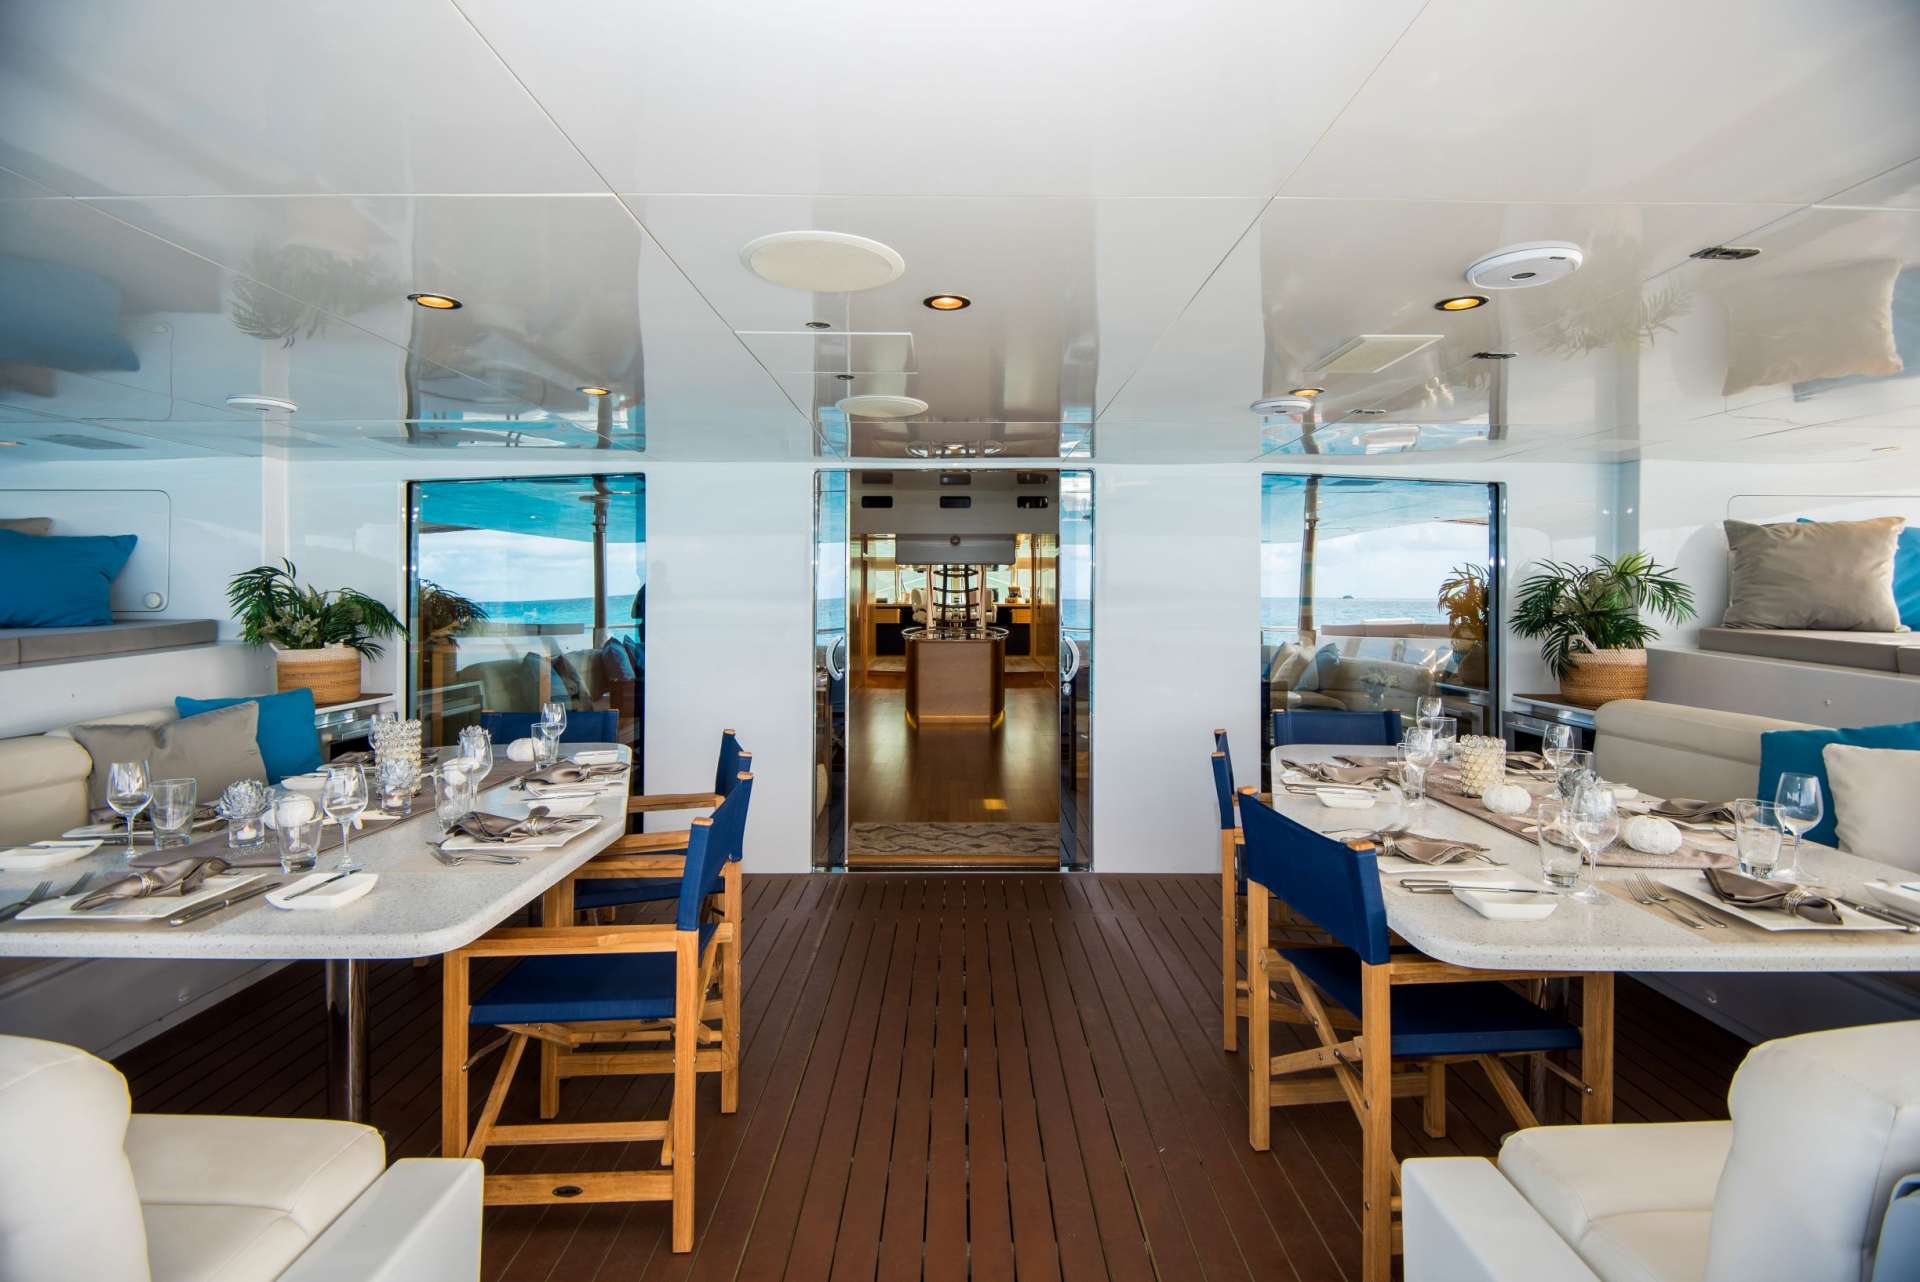 Catamaran Yacht 'BELLA VITA' Aft Deck Dining, 10 PAX, 6 Crew, 105.00 Ft, 32.00 Meters, Built 2003, C.M.N. Cherbourg, Fr, Refit Year 2018